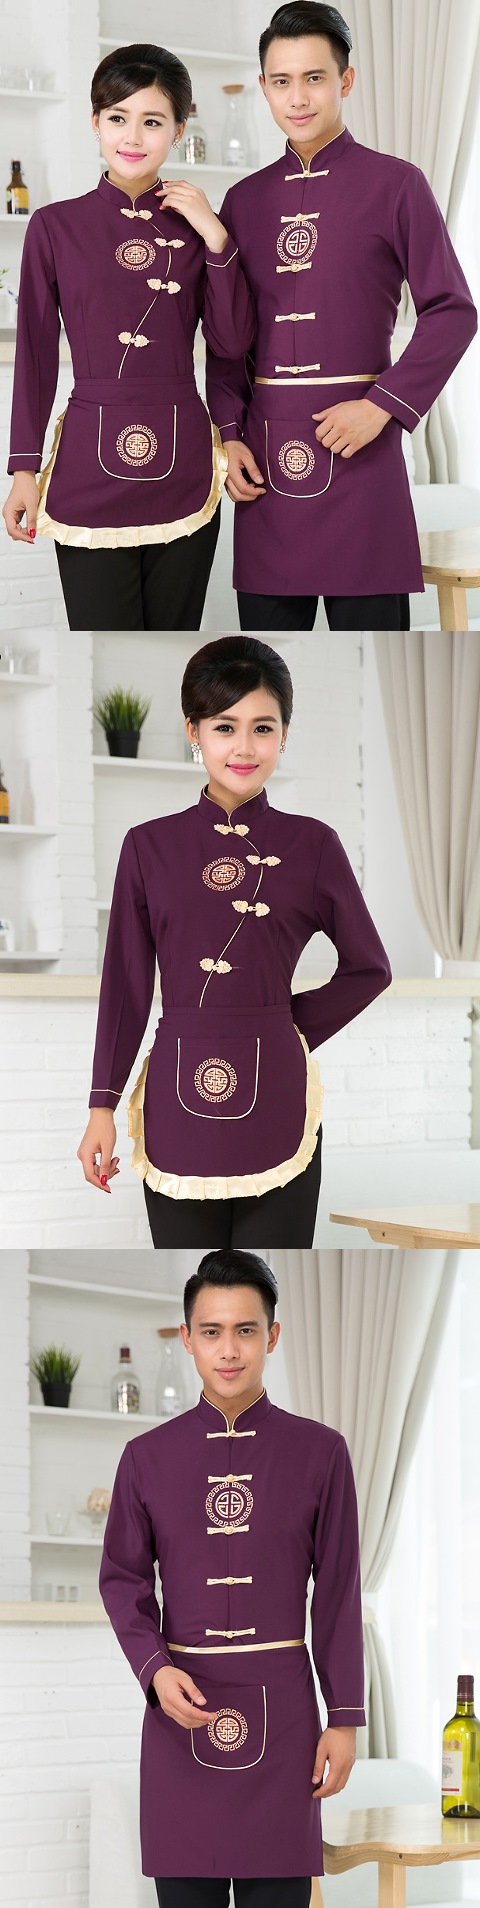 Mandarin Style Restaurant Uniform-Top (Purple)